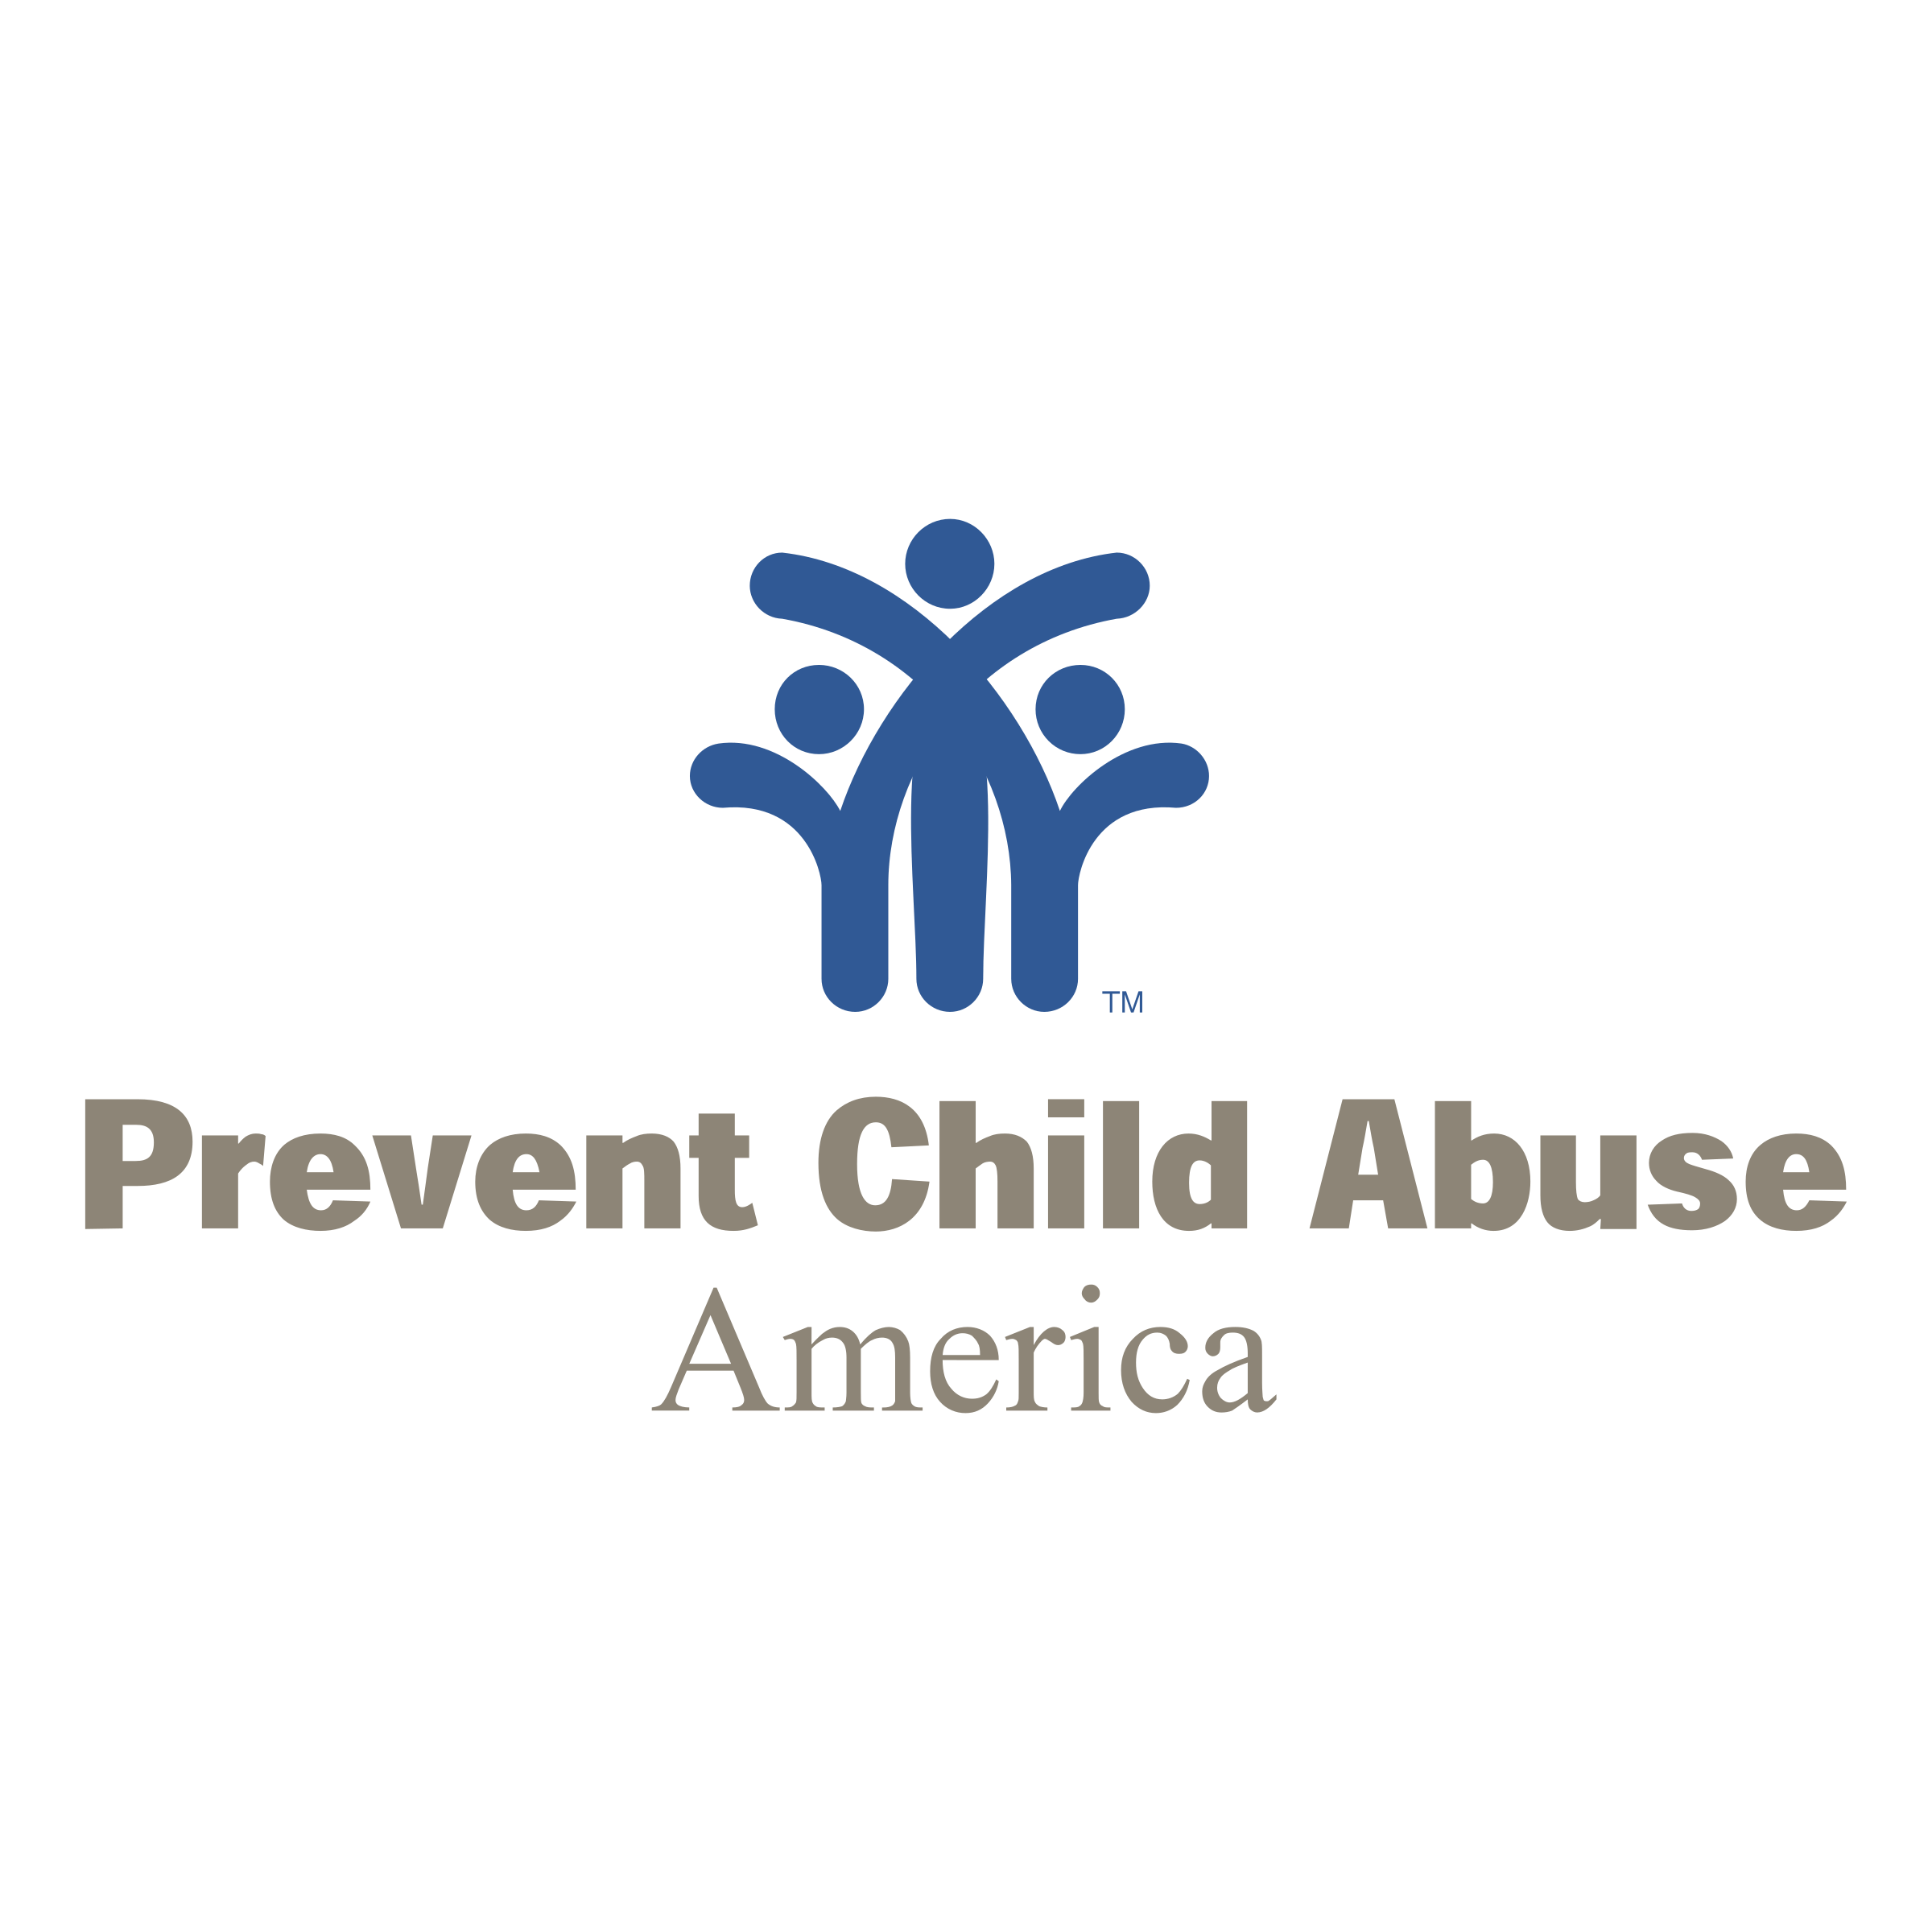 Abuse Logo - Prevent Child Abuse America Logo PNG Transparent & SVG Vector